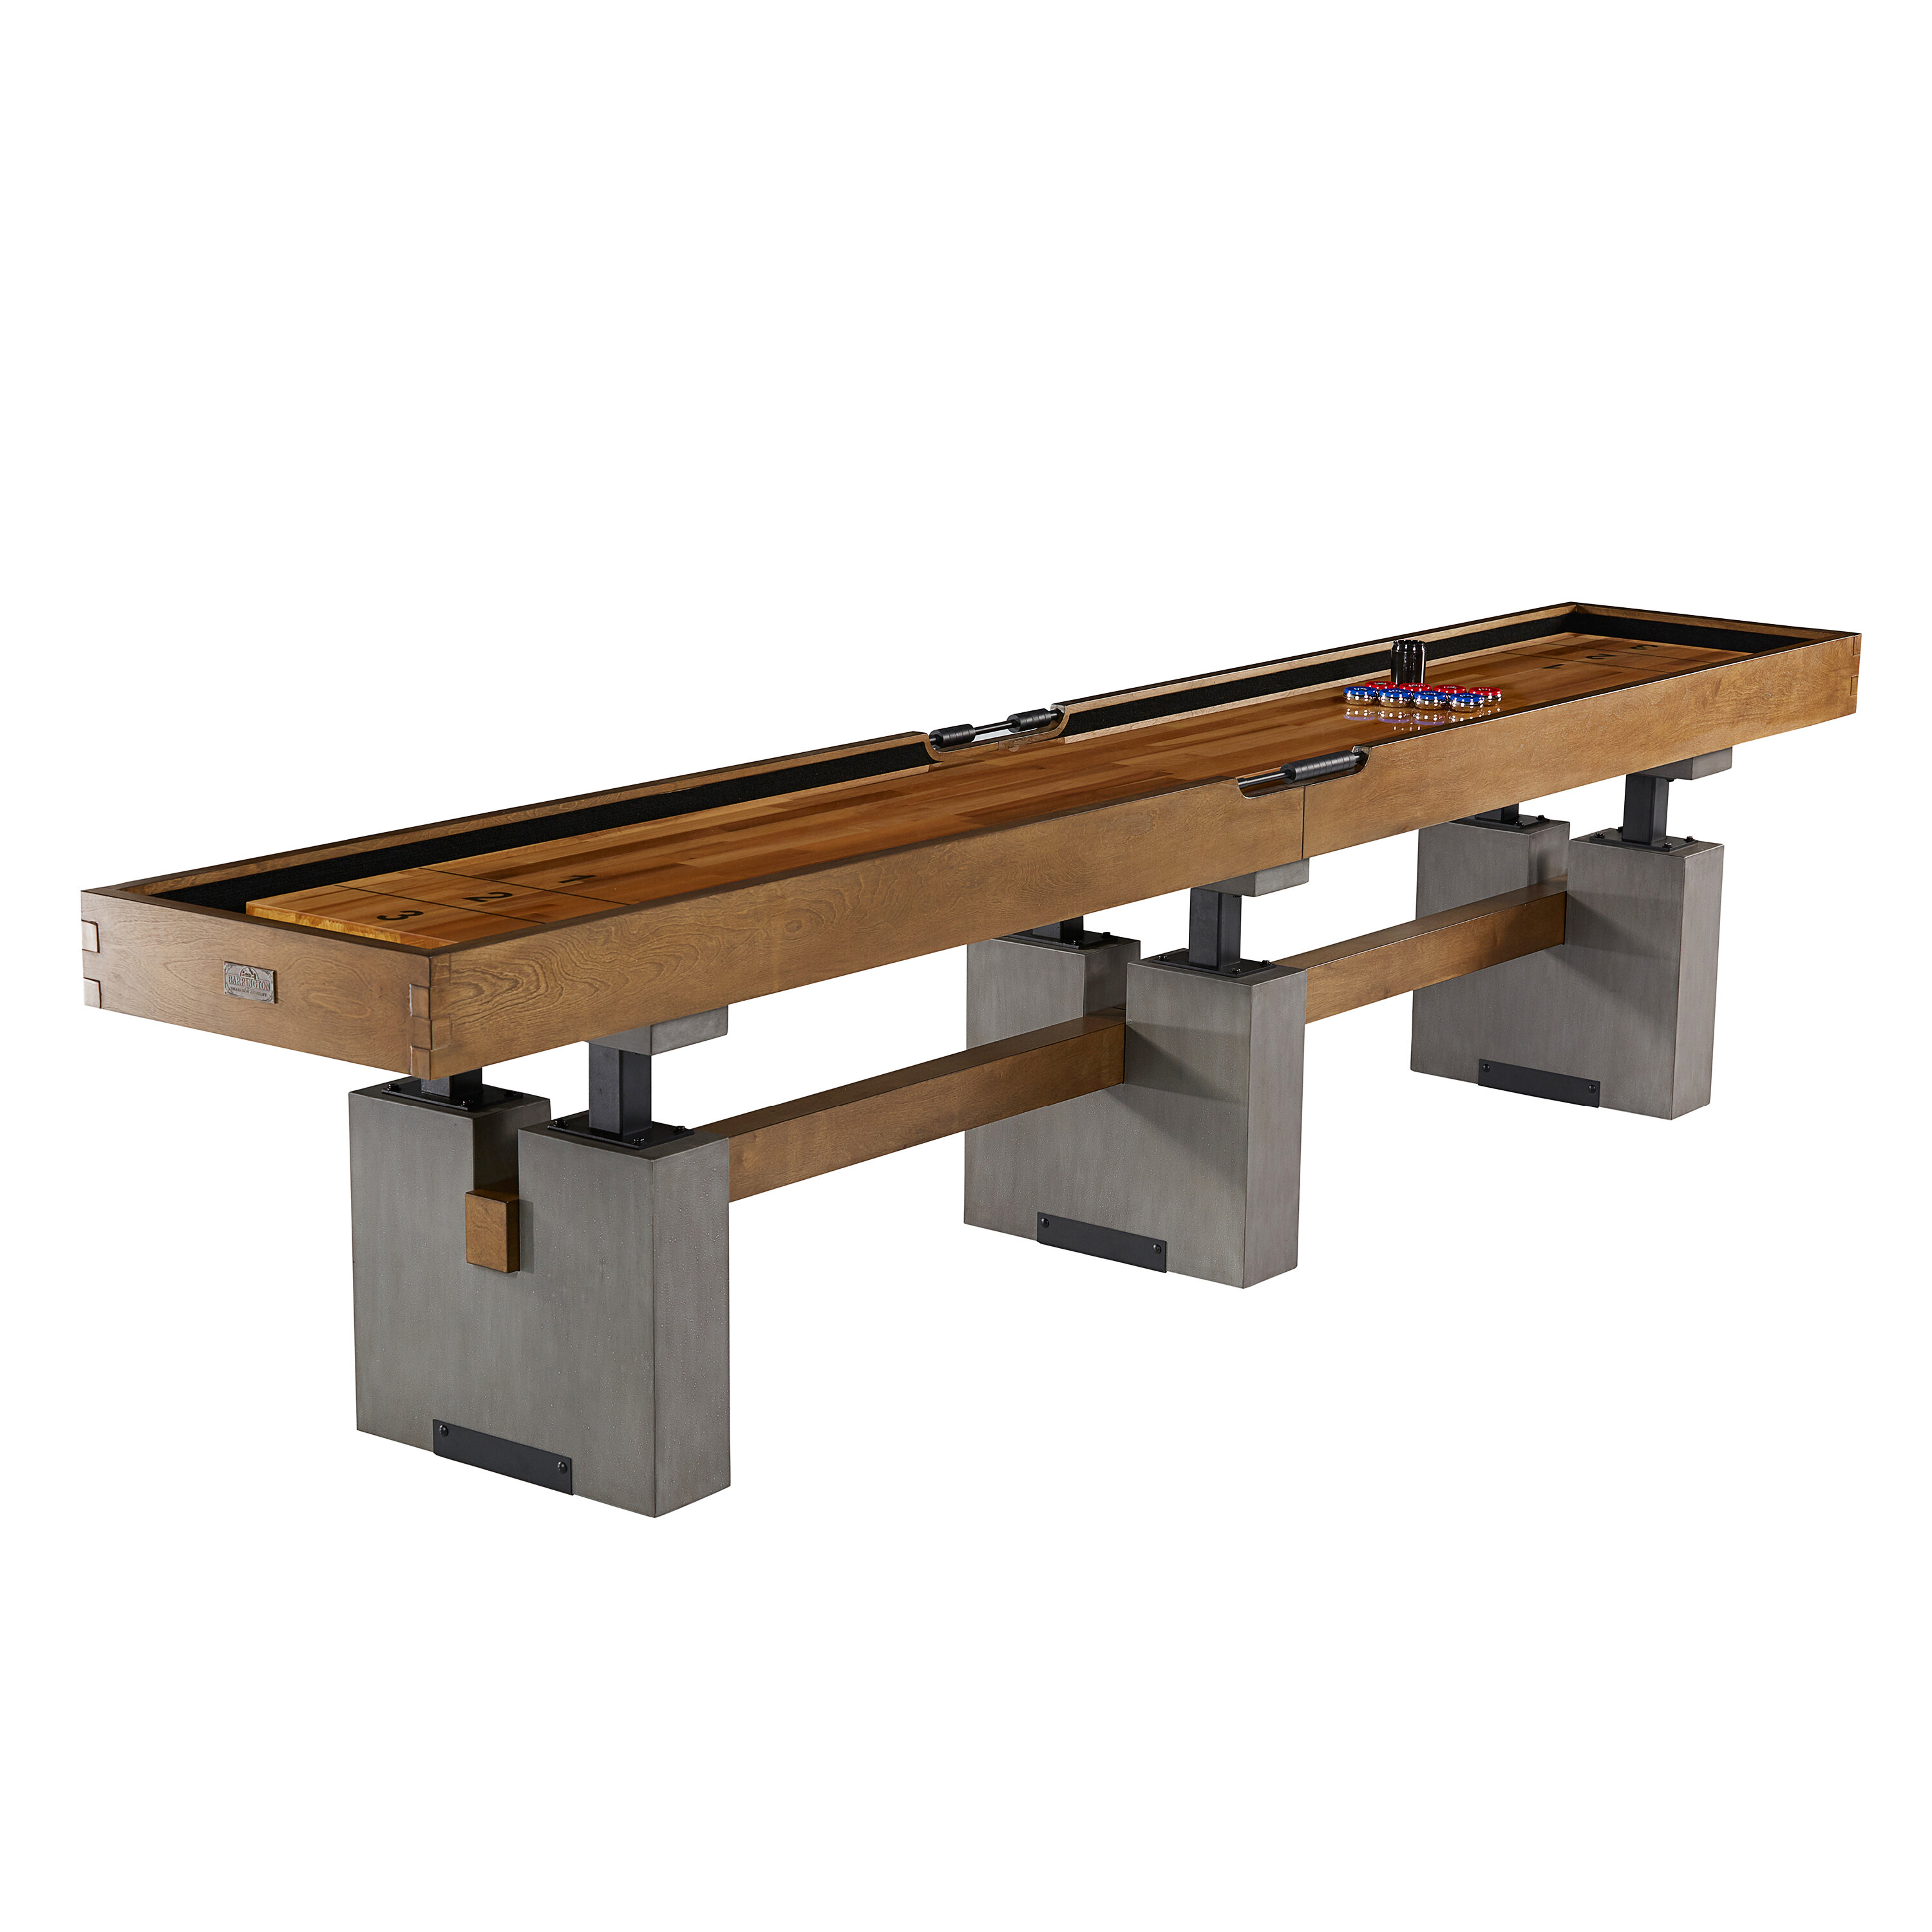 Berner Billiards The Rustic 12 Foot Shuffleboard Table in Brown